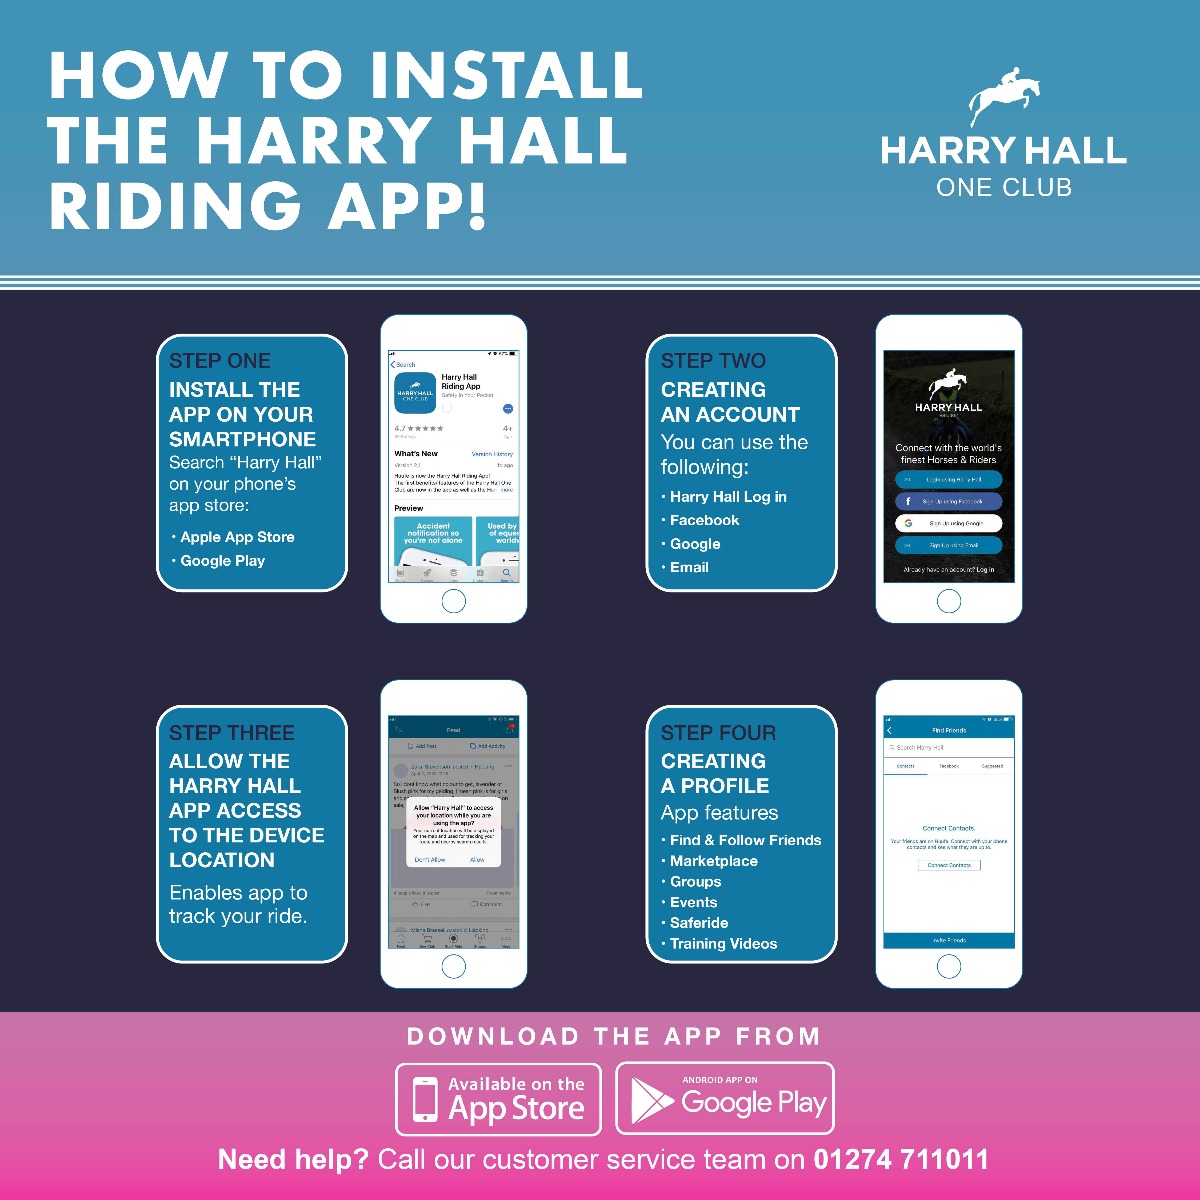 Harry Hall riding